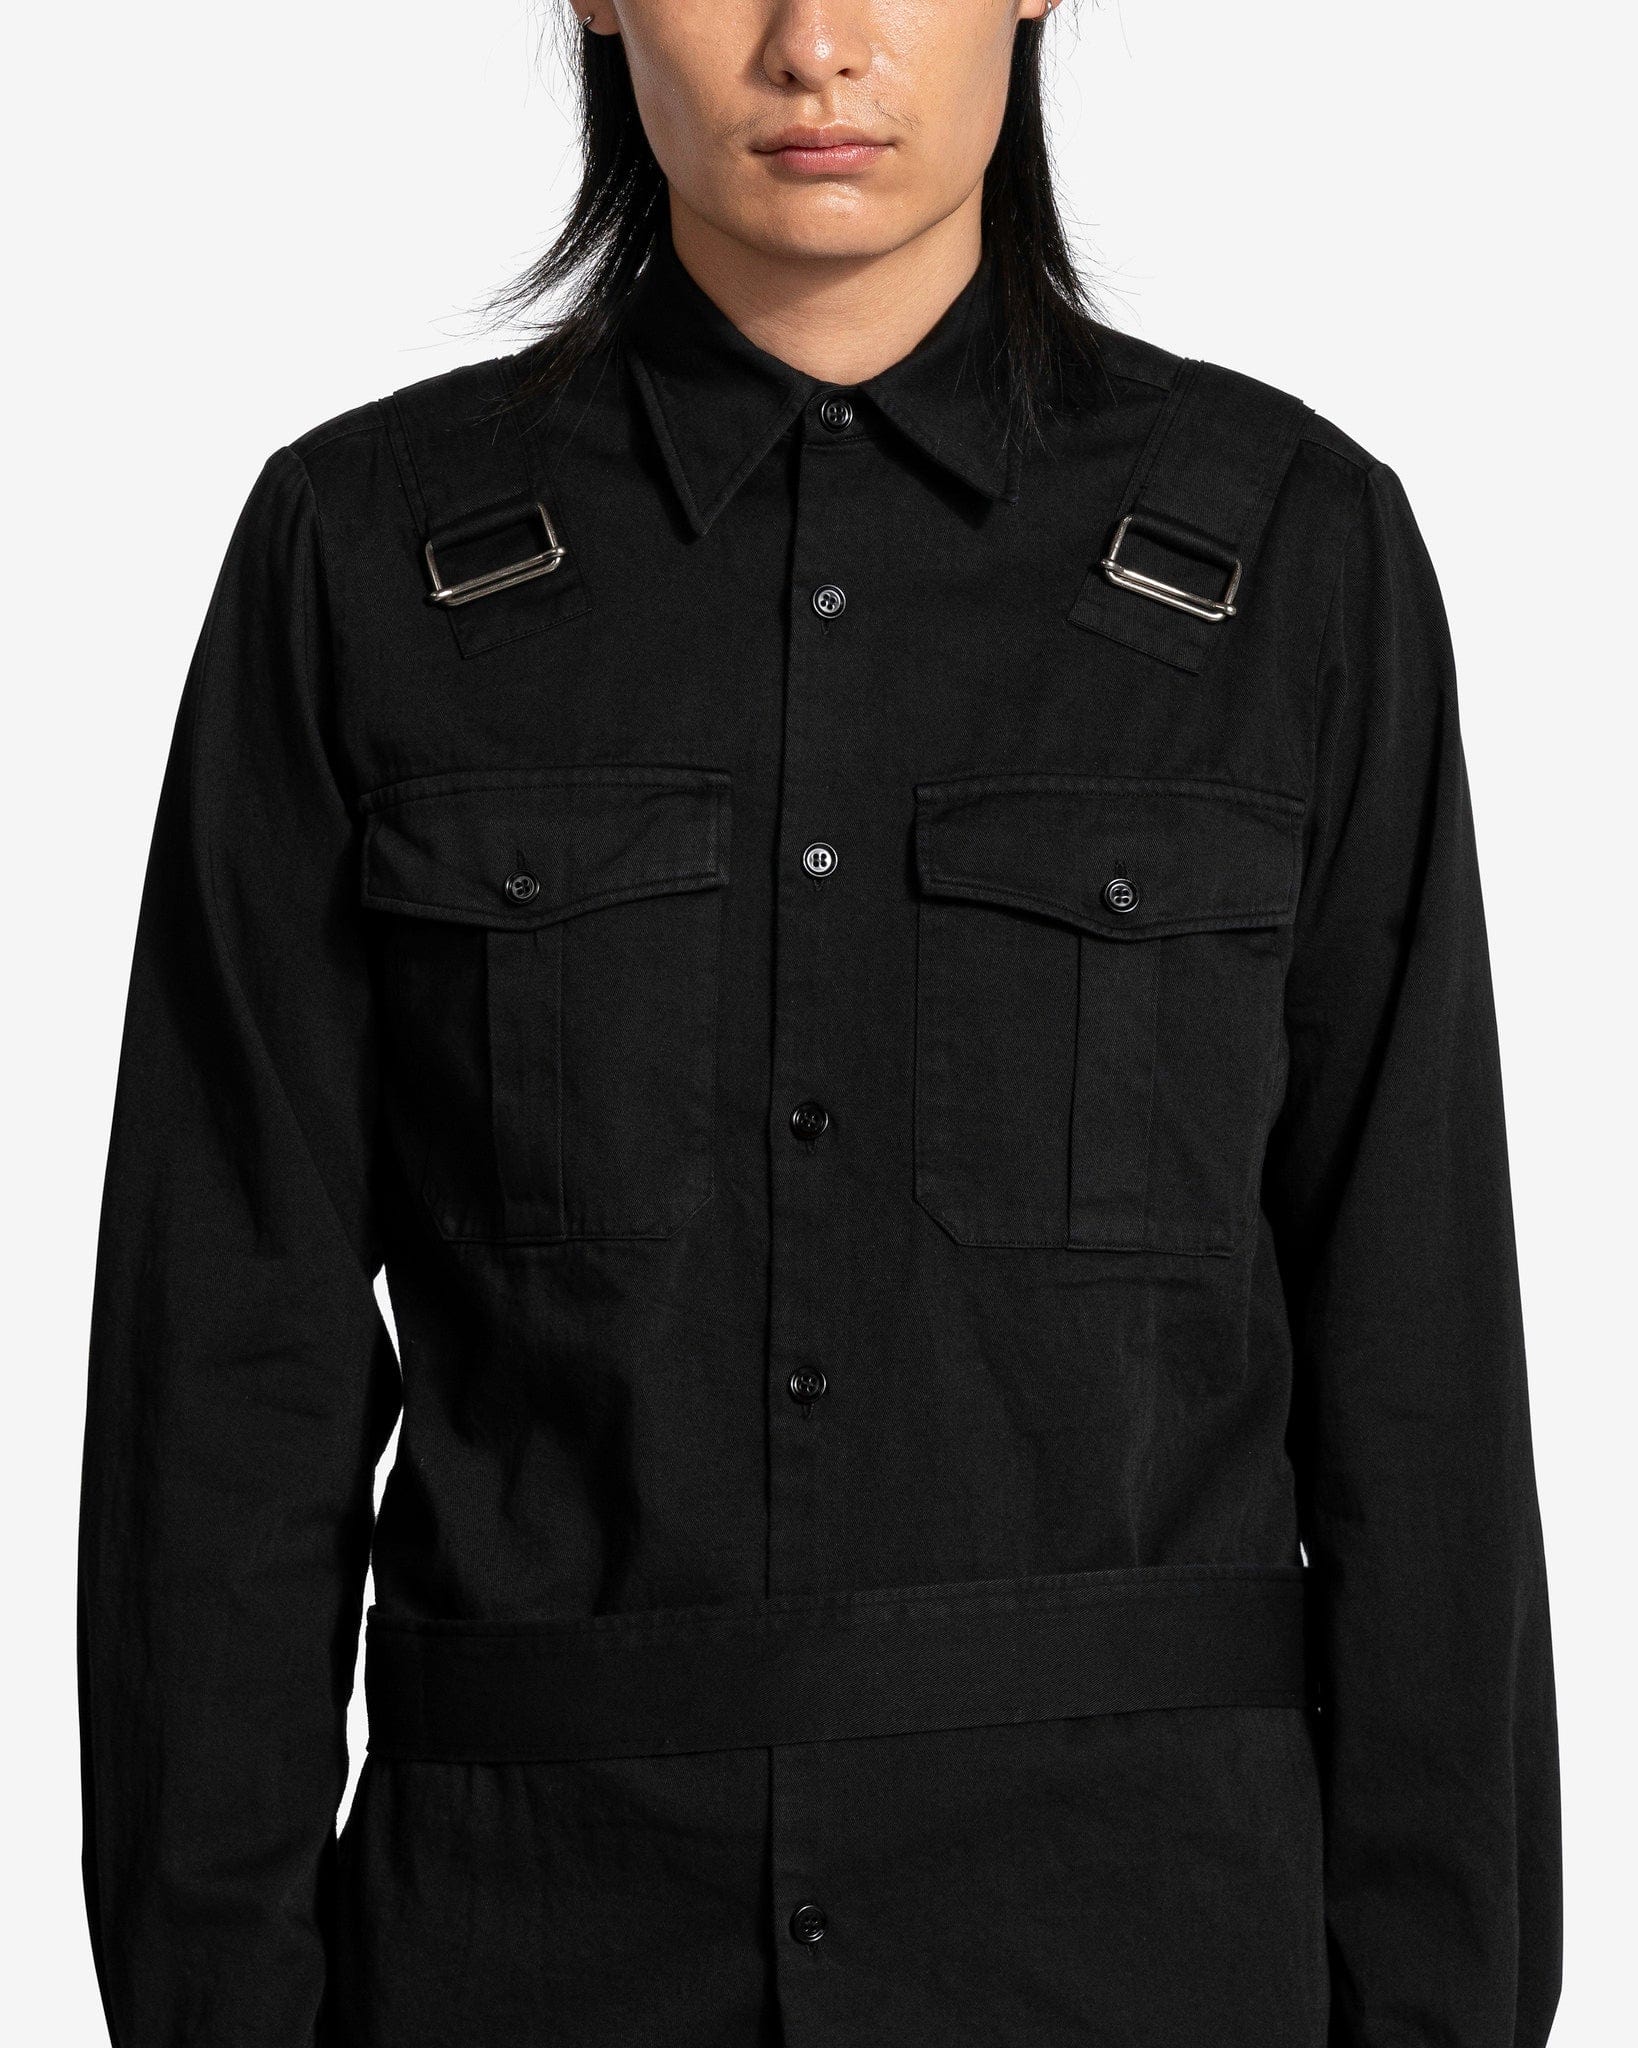 Dries Van Noten Men's Shirts Carlos Bis GD Shirt in Black